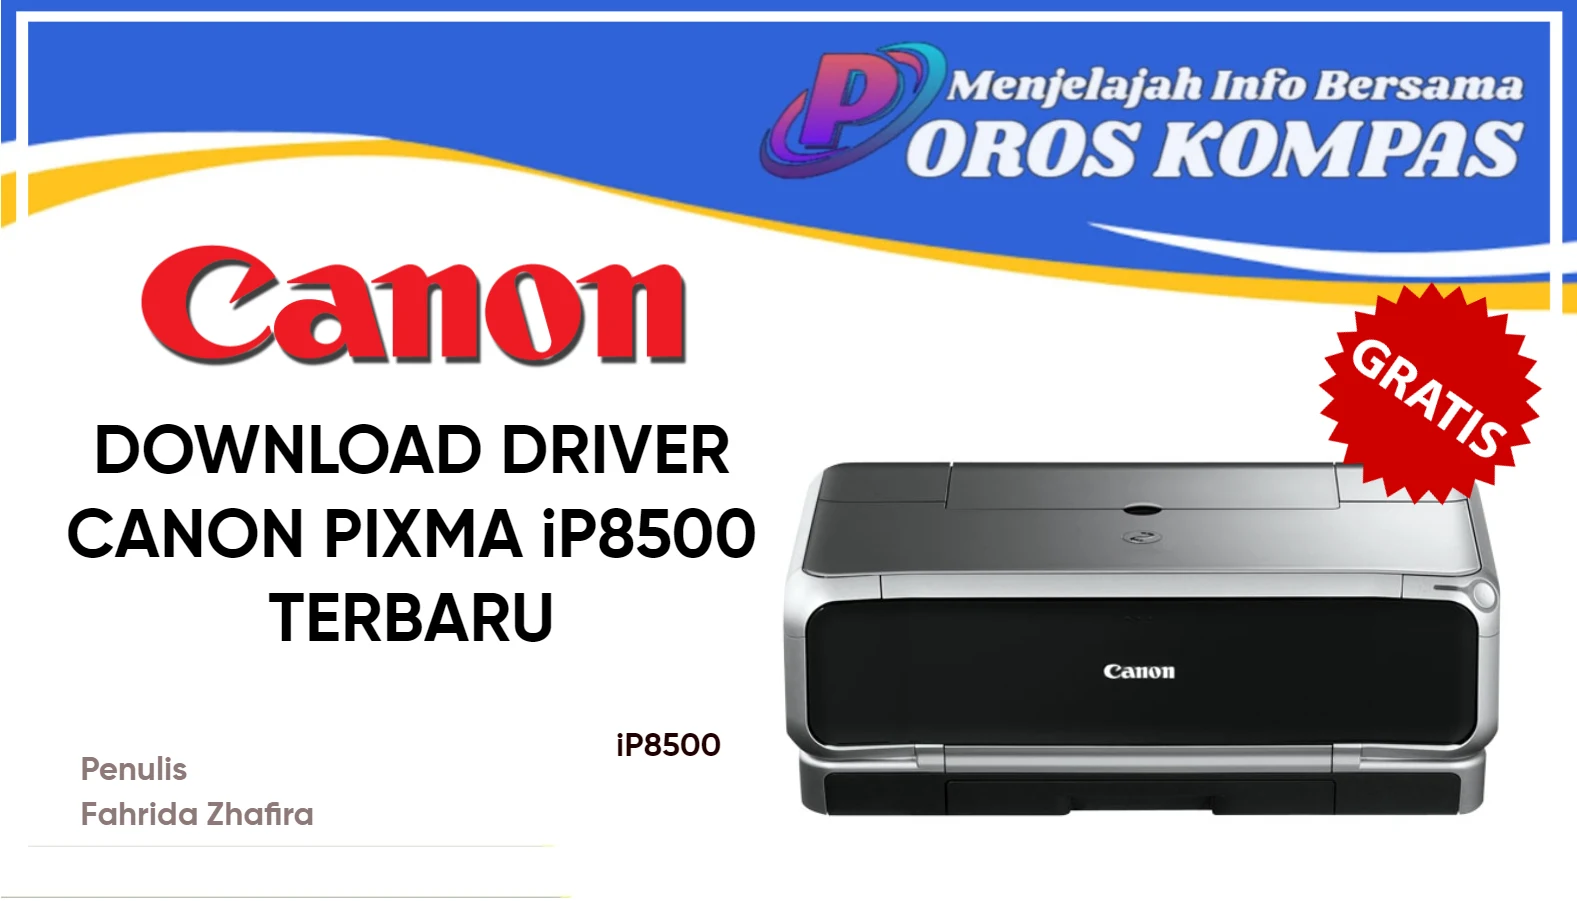 Gratis Download Driver Canon Pixma iP8500 Terbaru